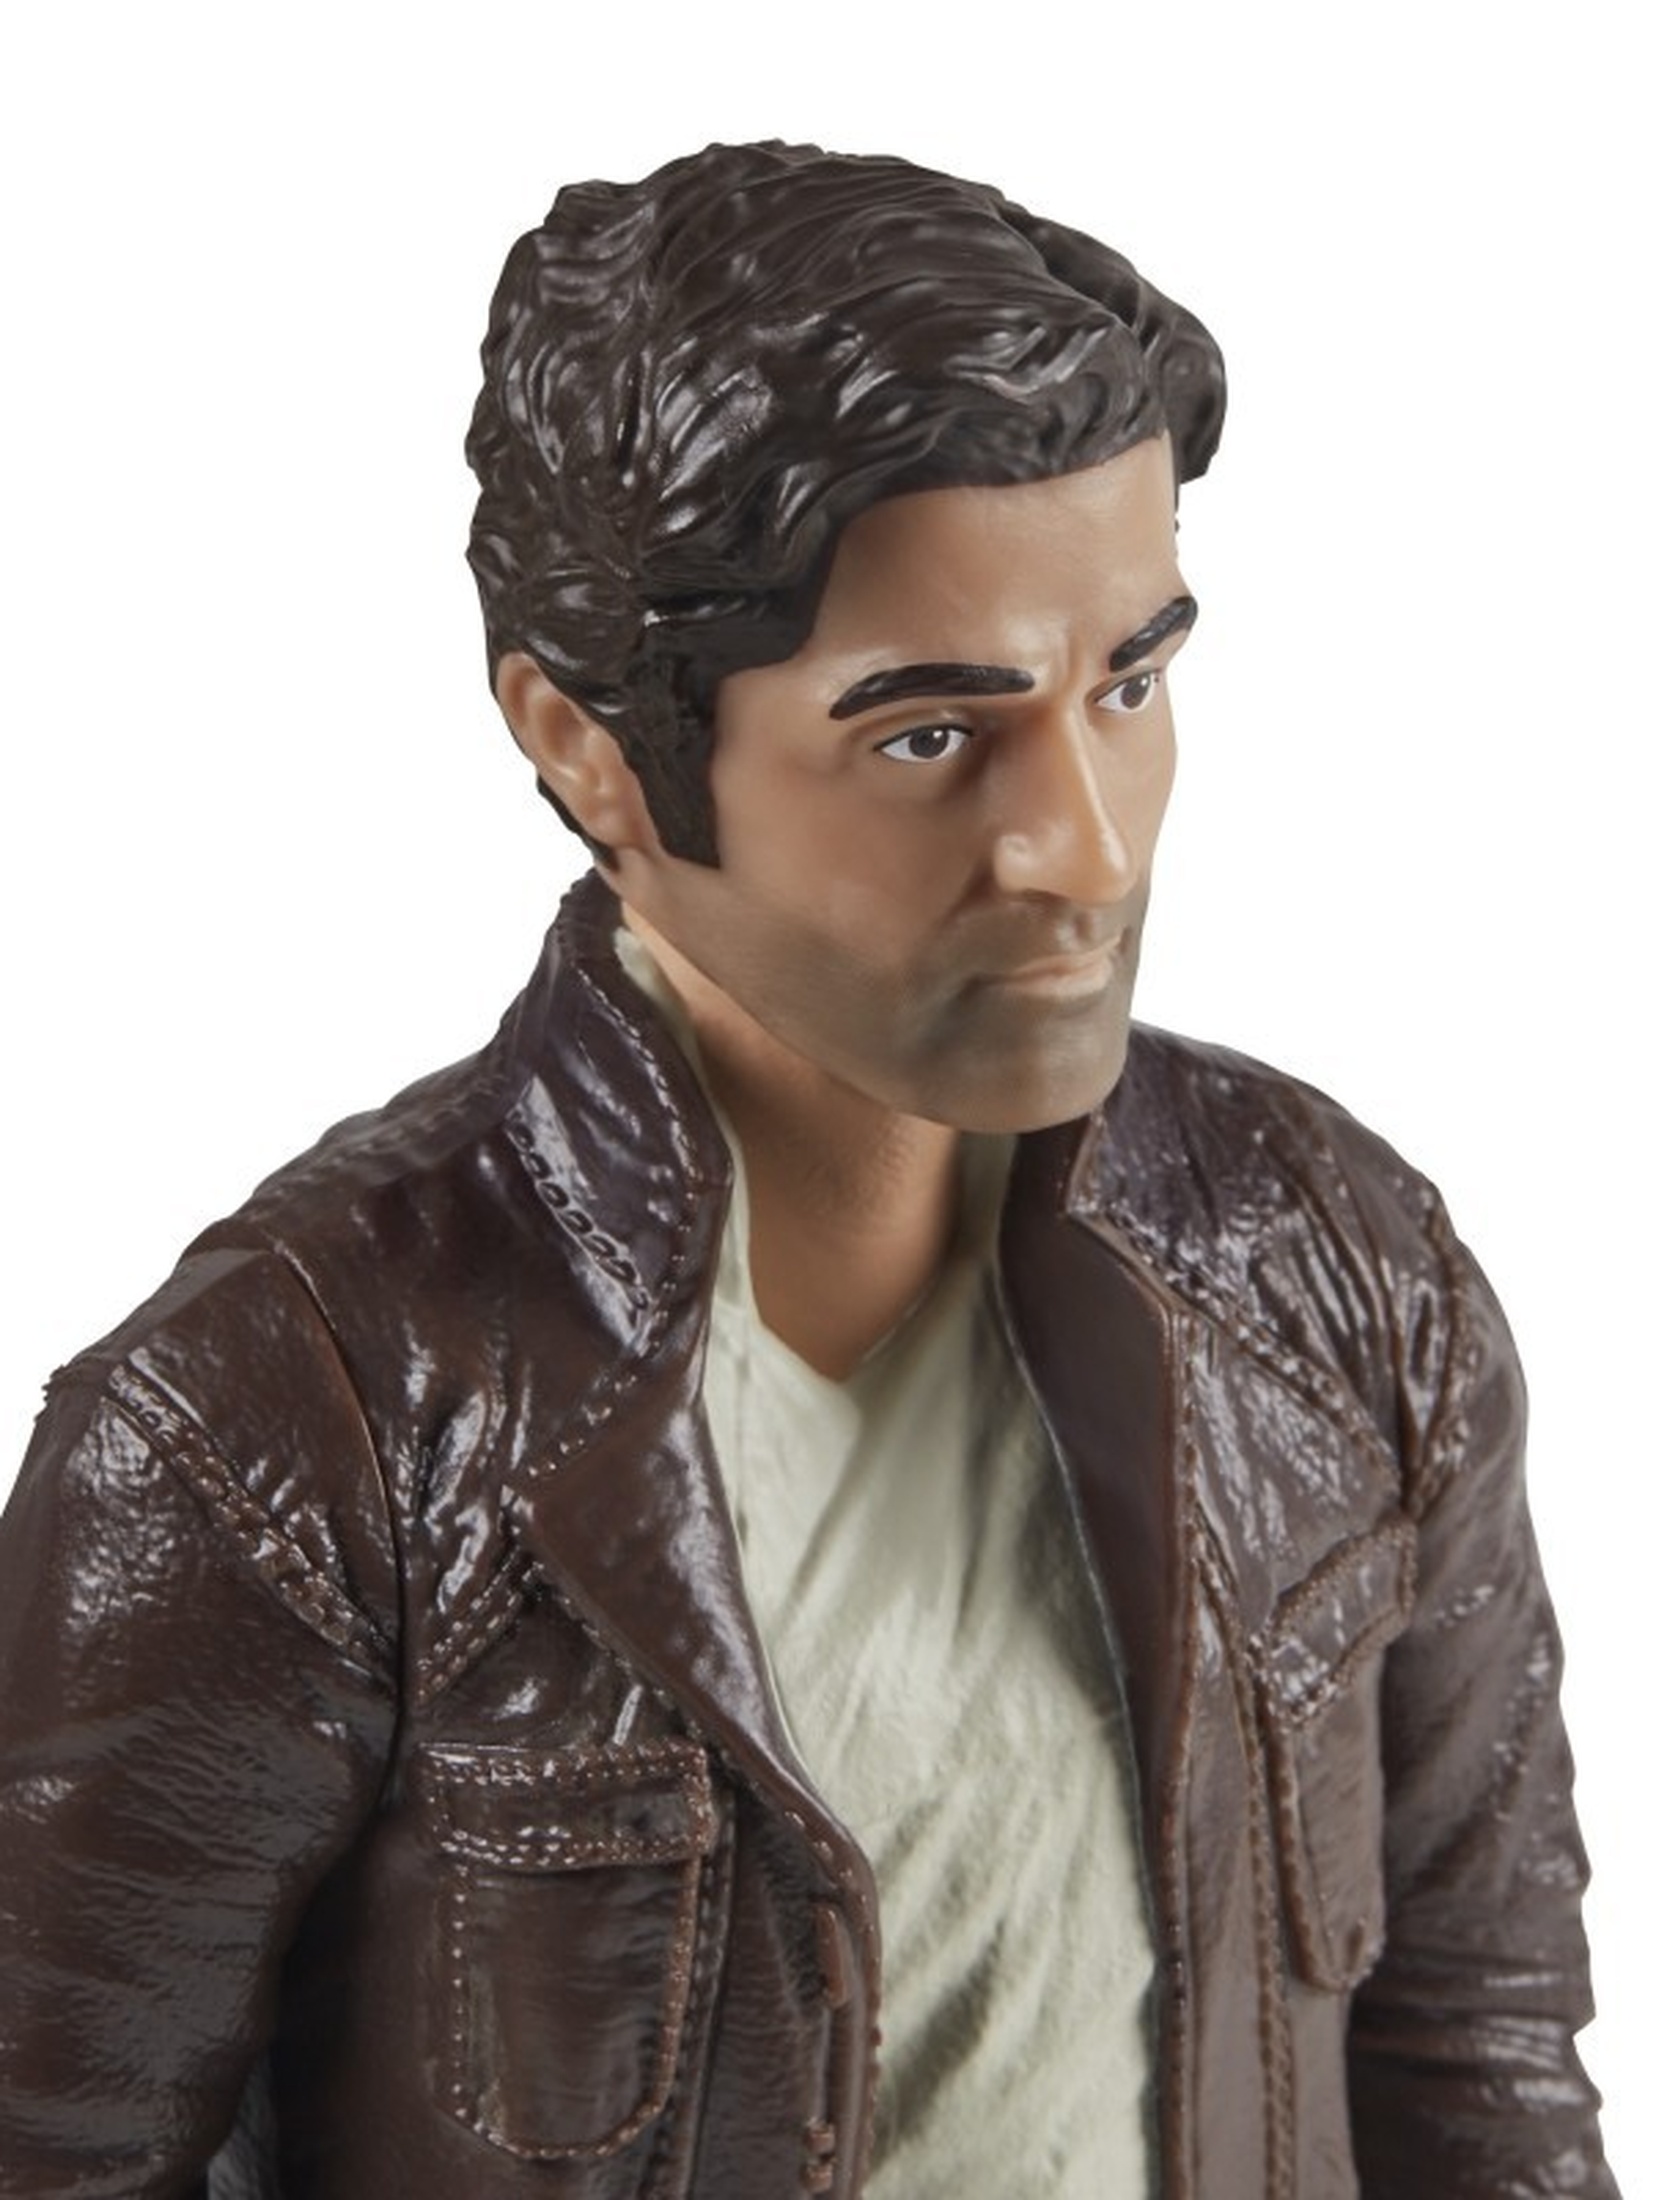 Star Wars Figurki 30 cm, Captain Poe Dameron